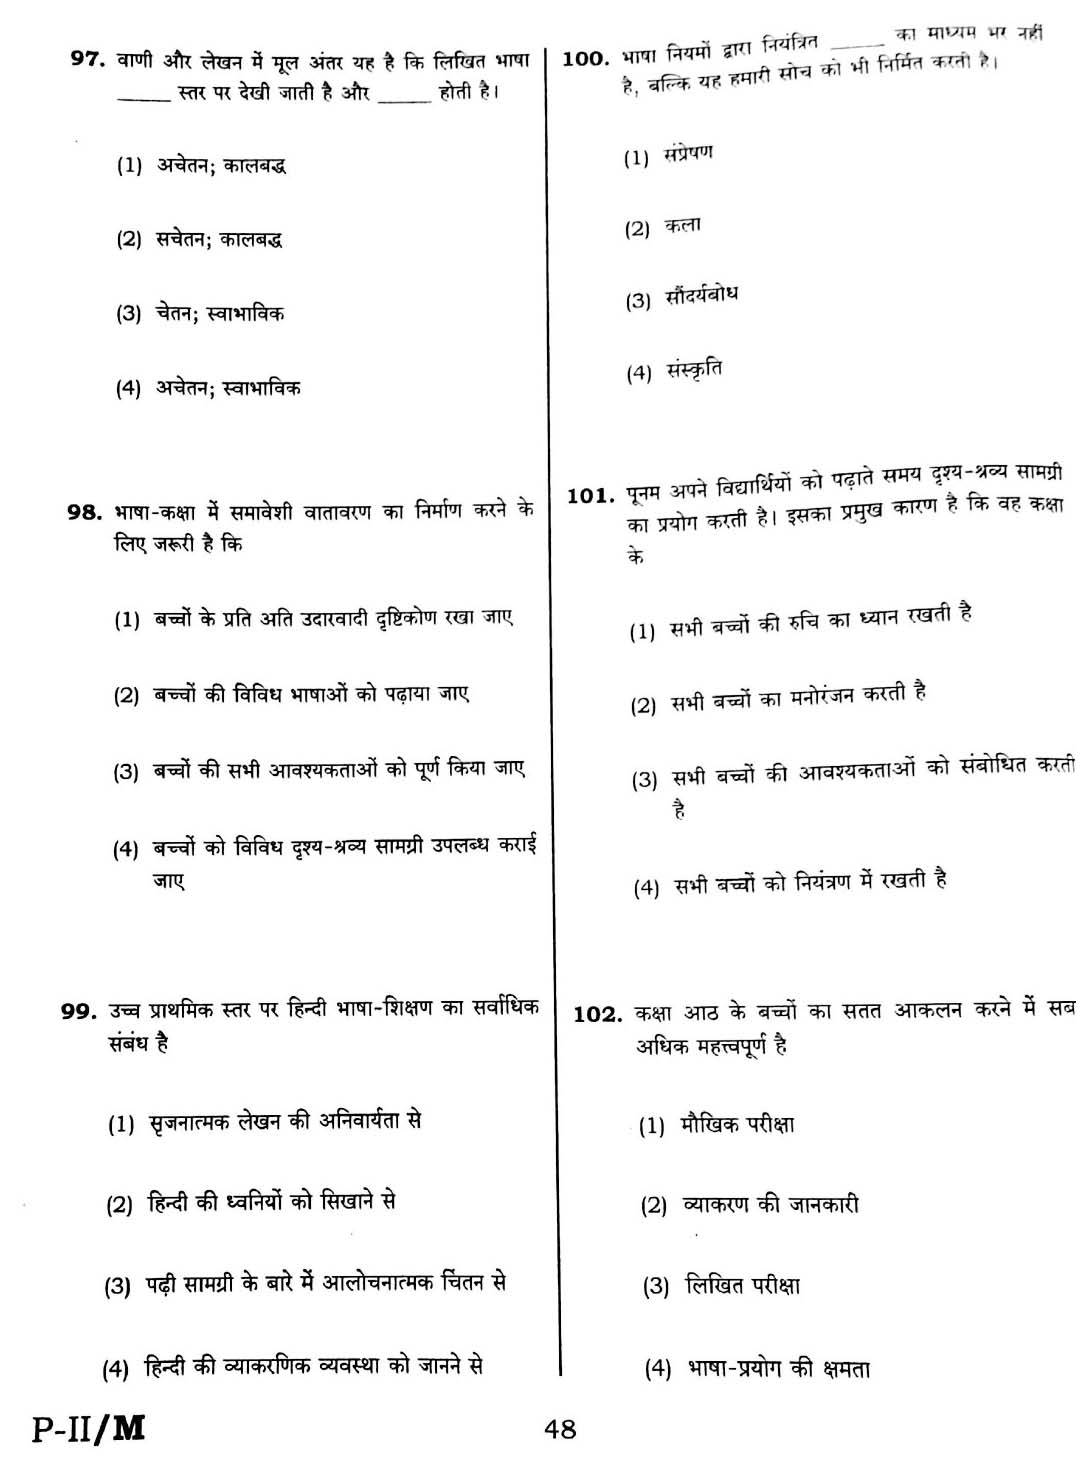 CTET February 2016 Paper 2 Part IV Language 1 Hindi 2